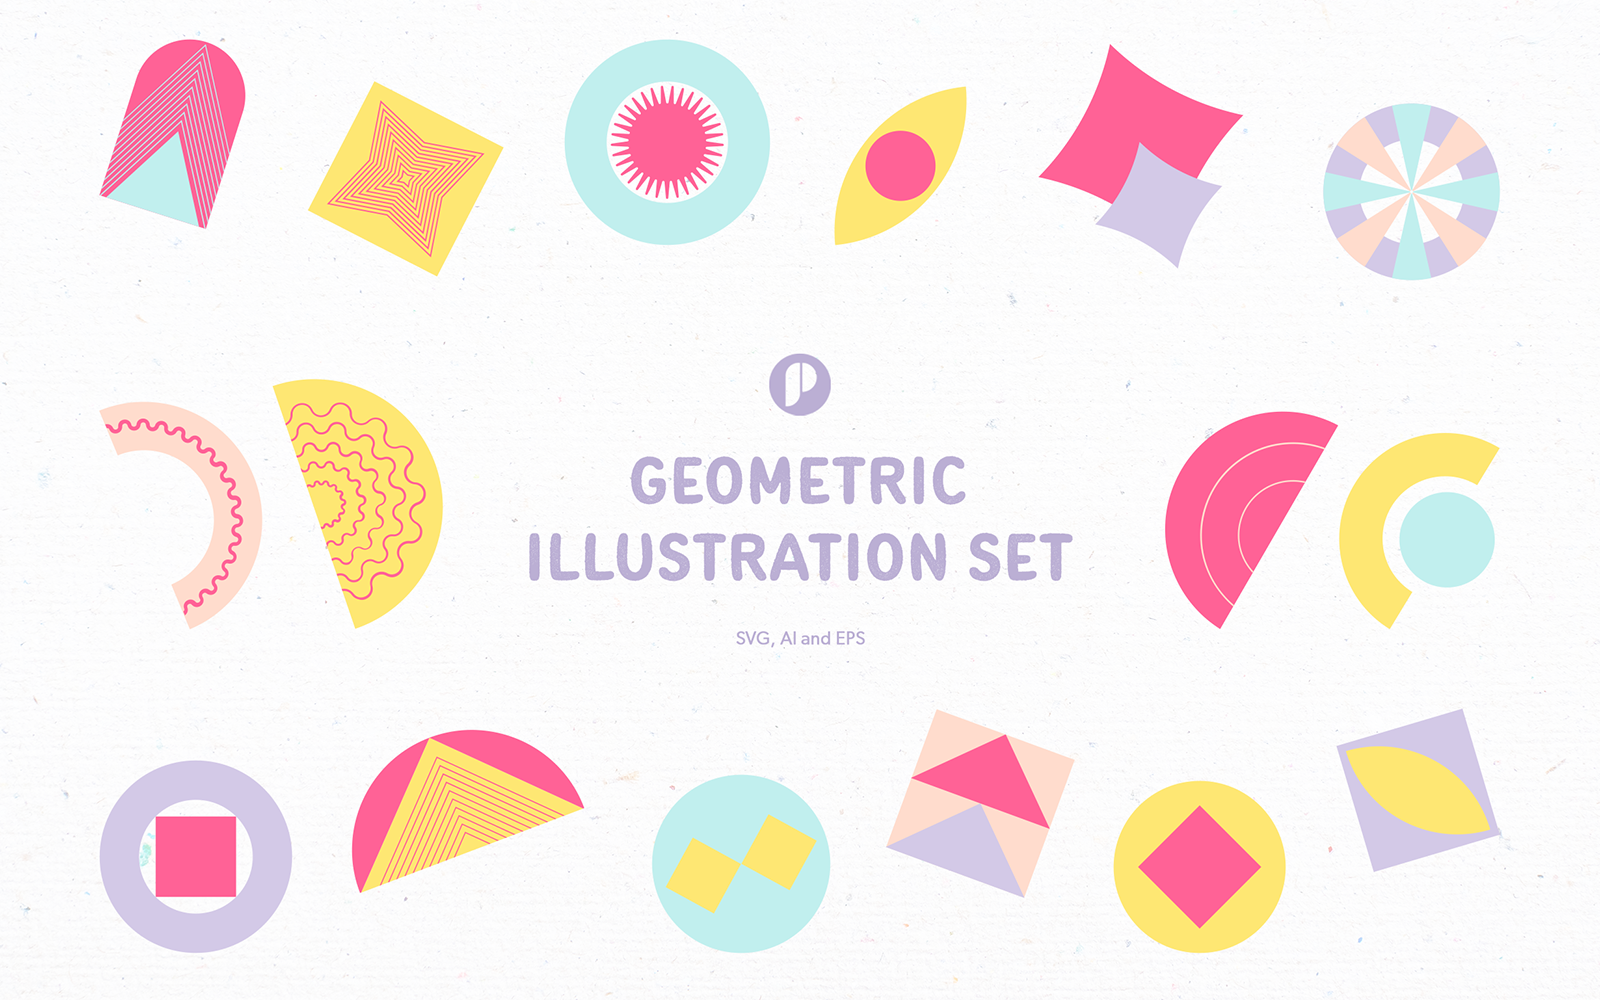 Colorful & cheerful geometric illustration set